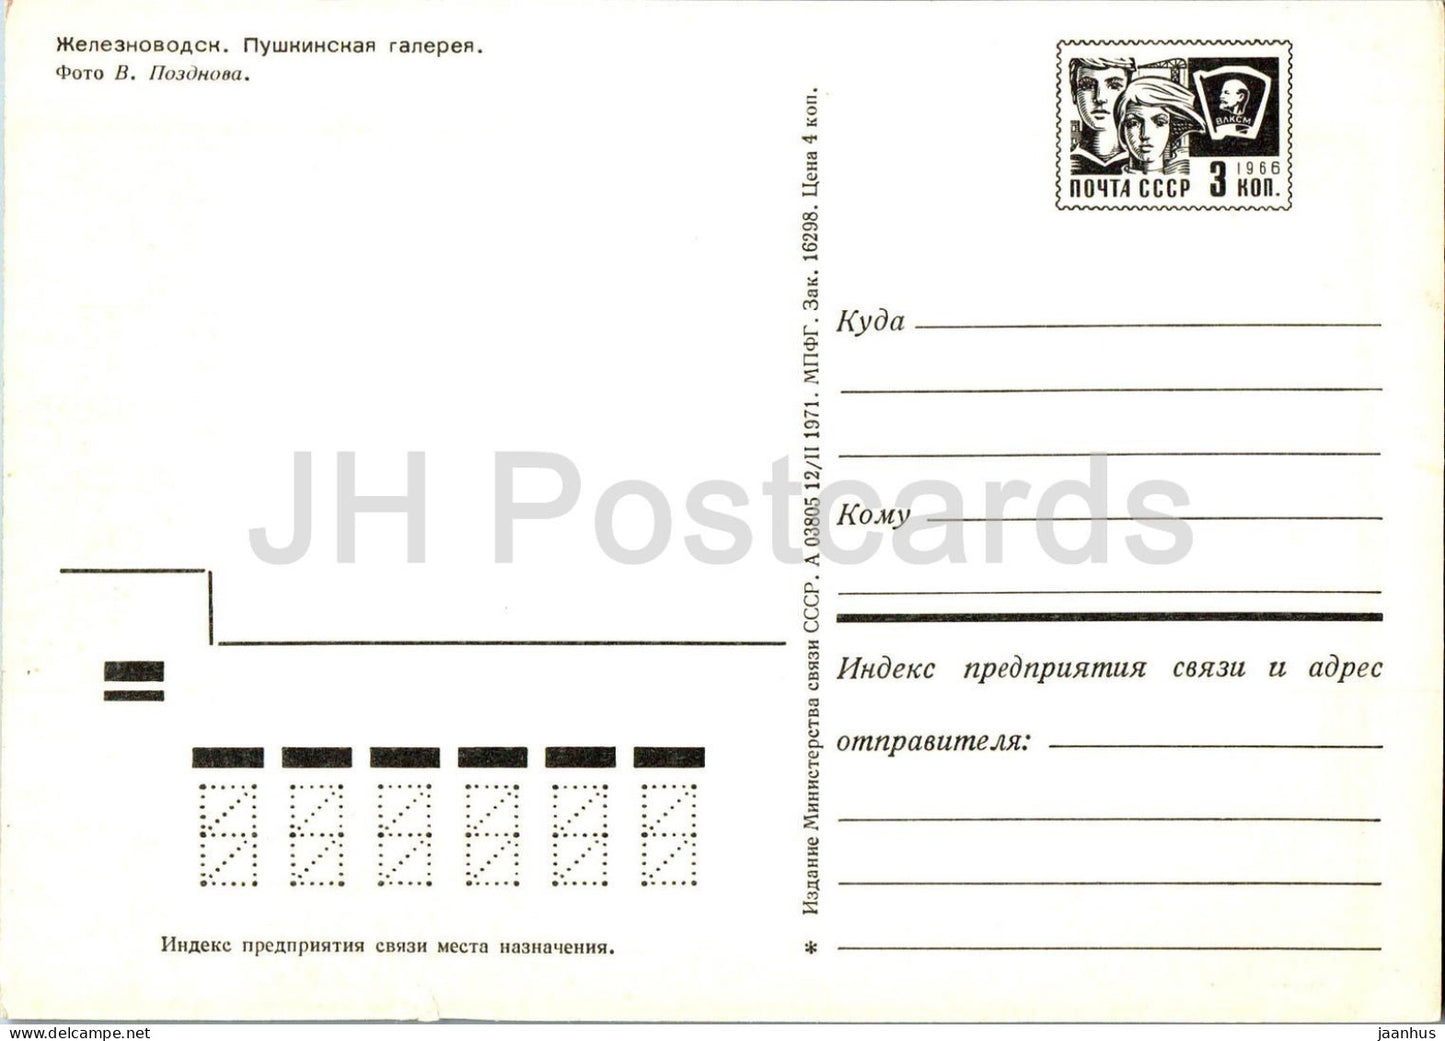 Jeleznovodsk - Galerie Pouchkine - entier postal - 1971 - Russie URSS - inutilisé 